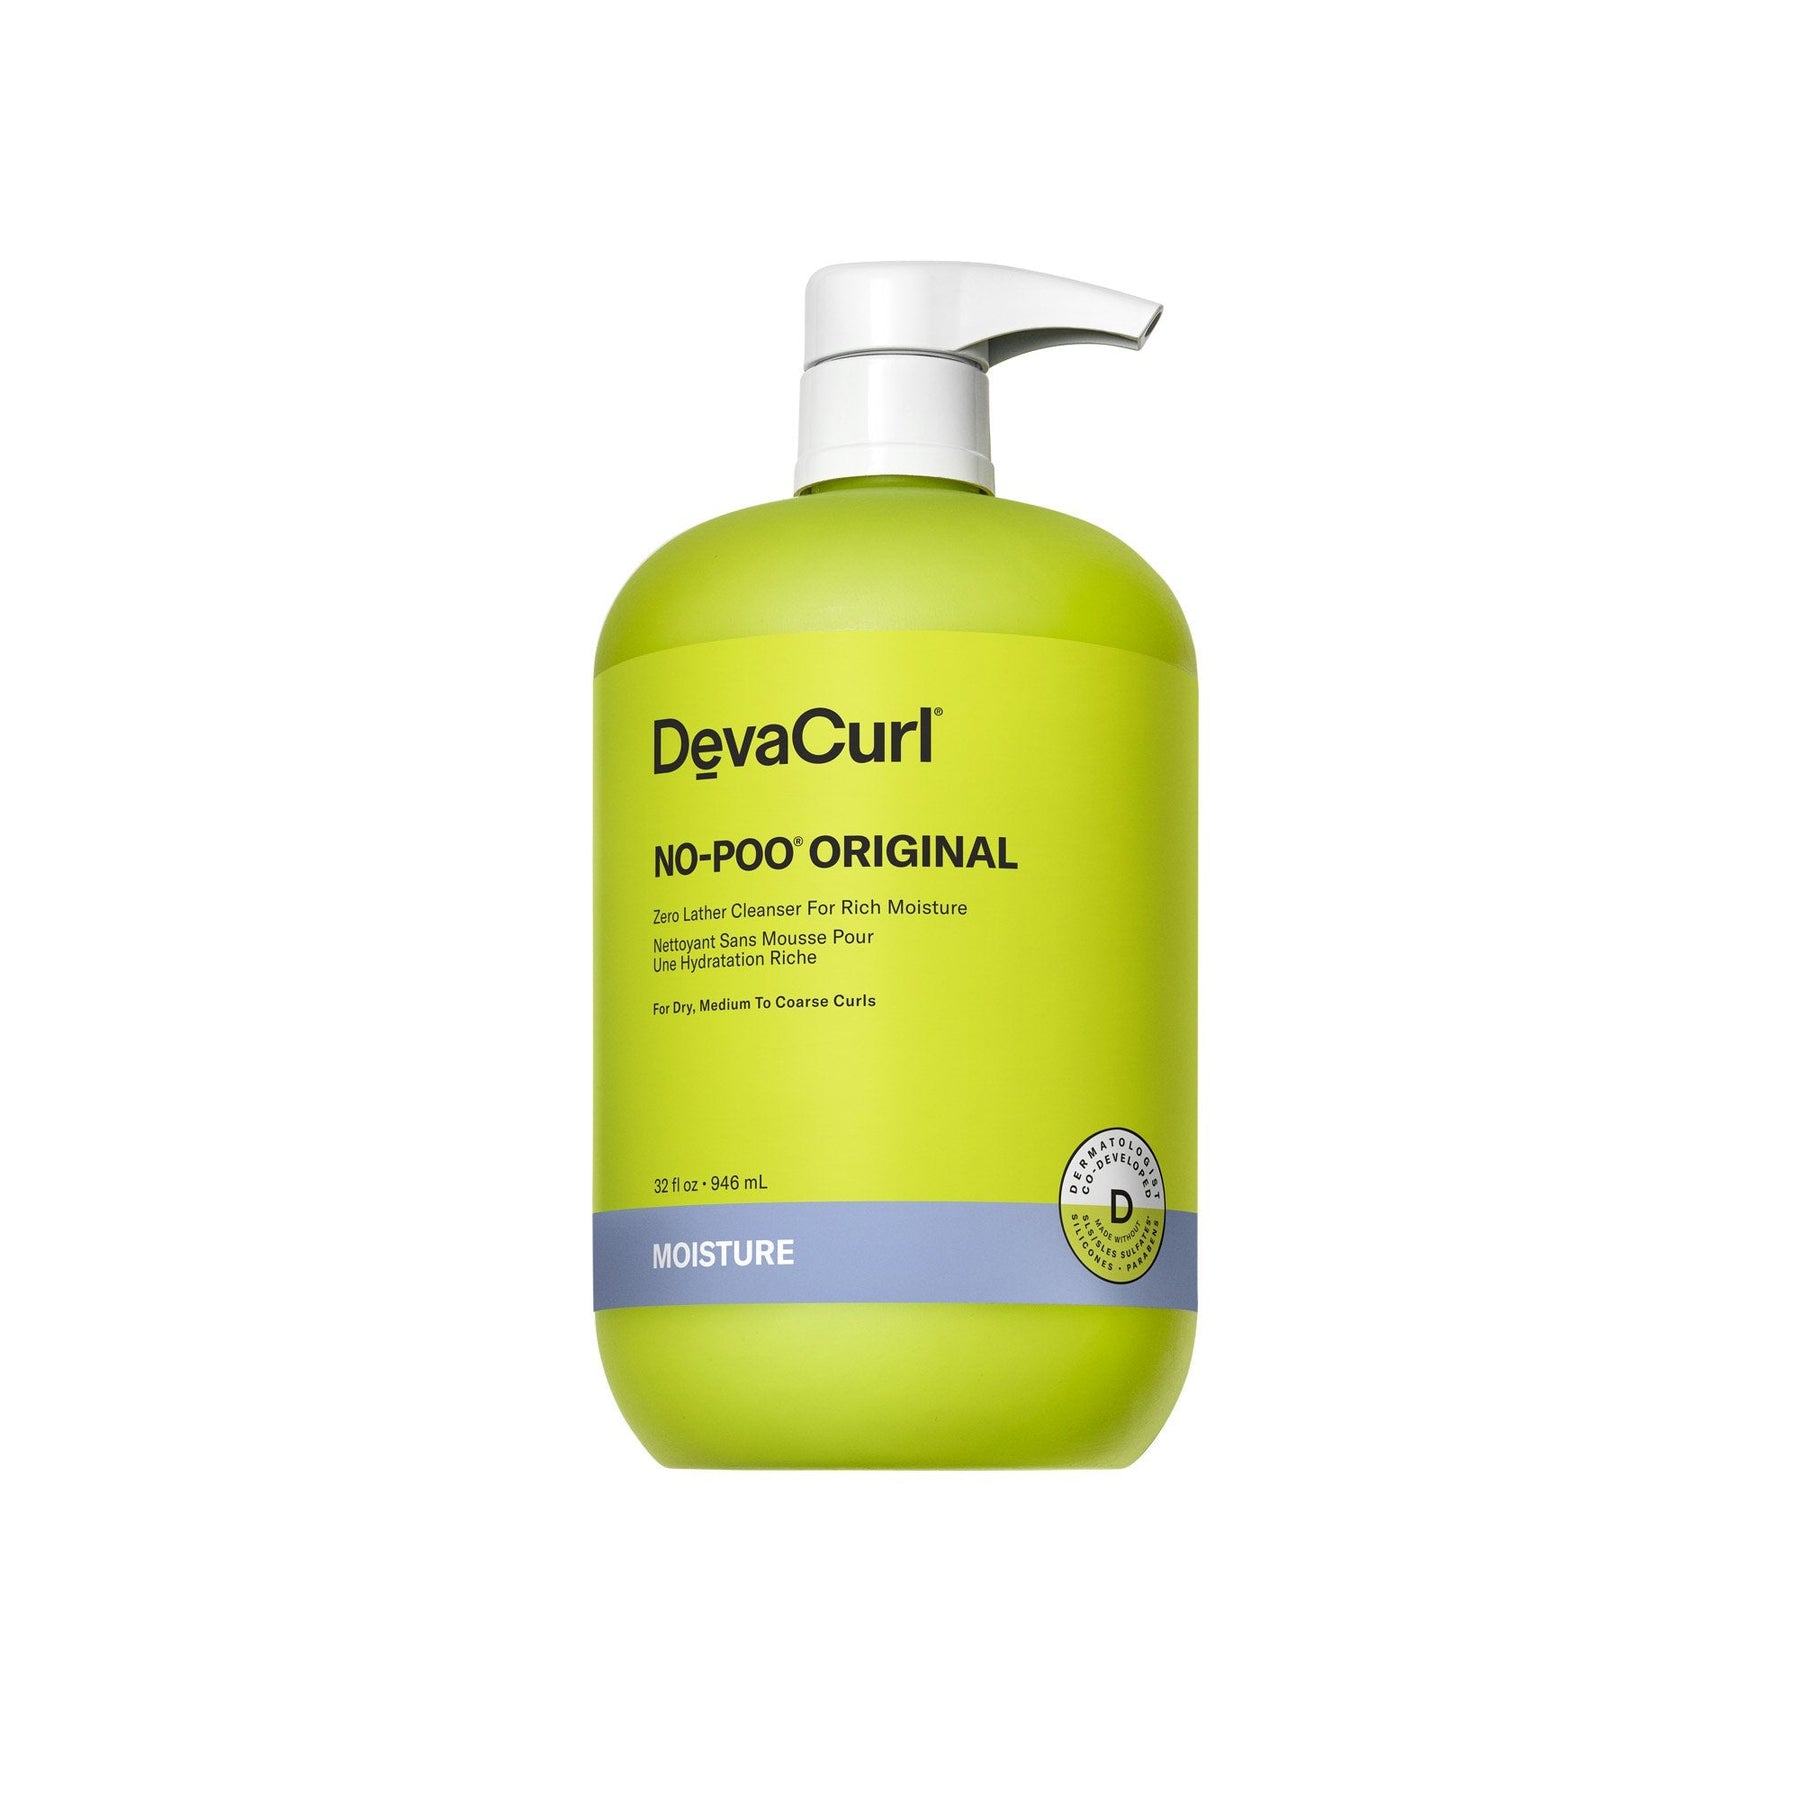 New! DevaCurl No-Poo Original - 32oz - by Deva Curl |ProCare Outlet|